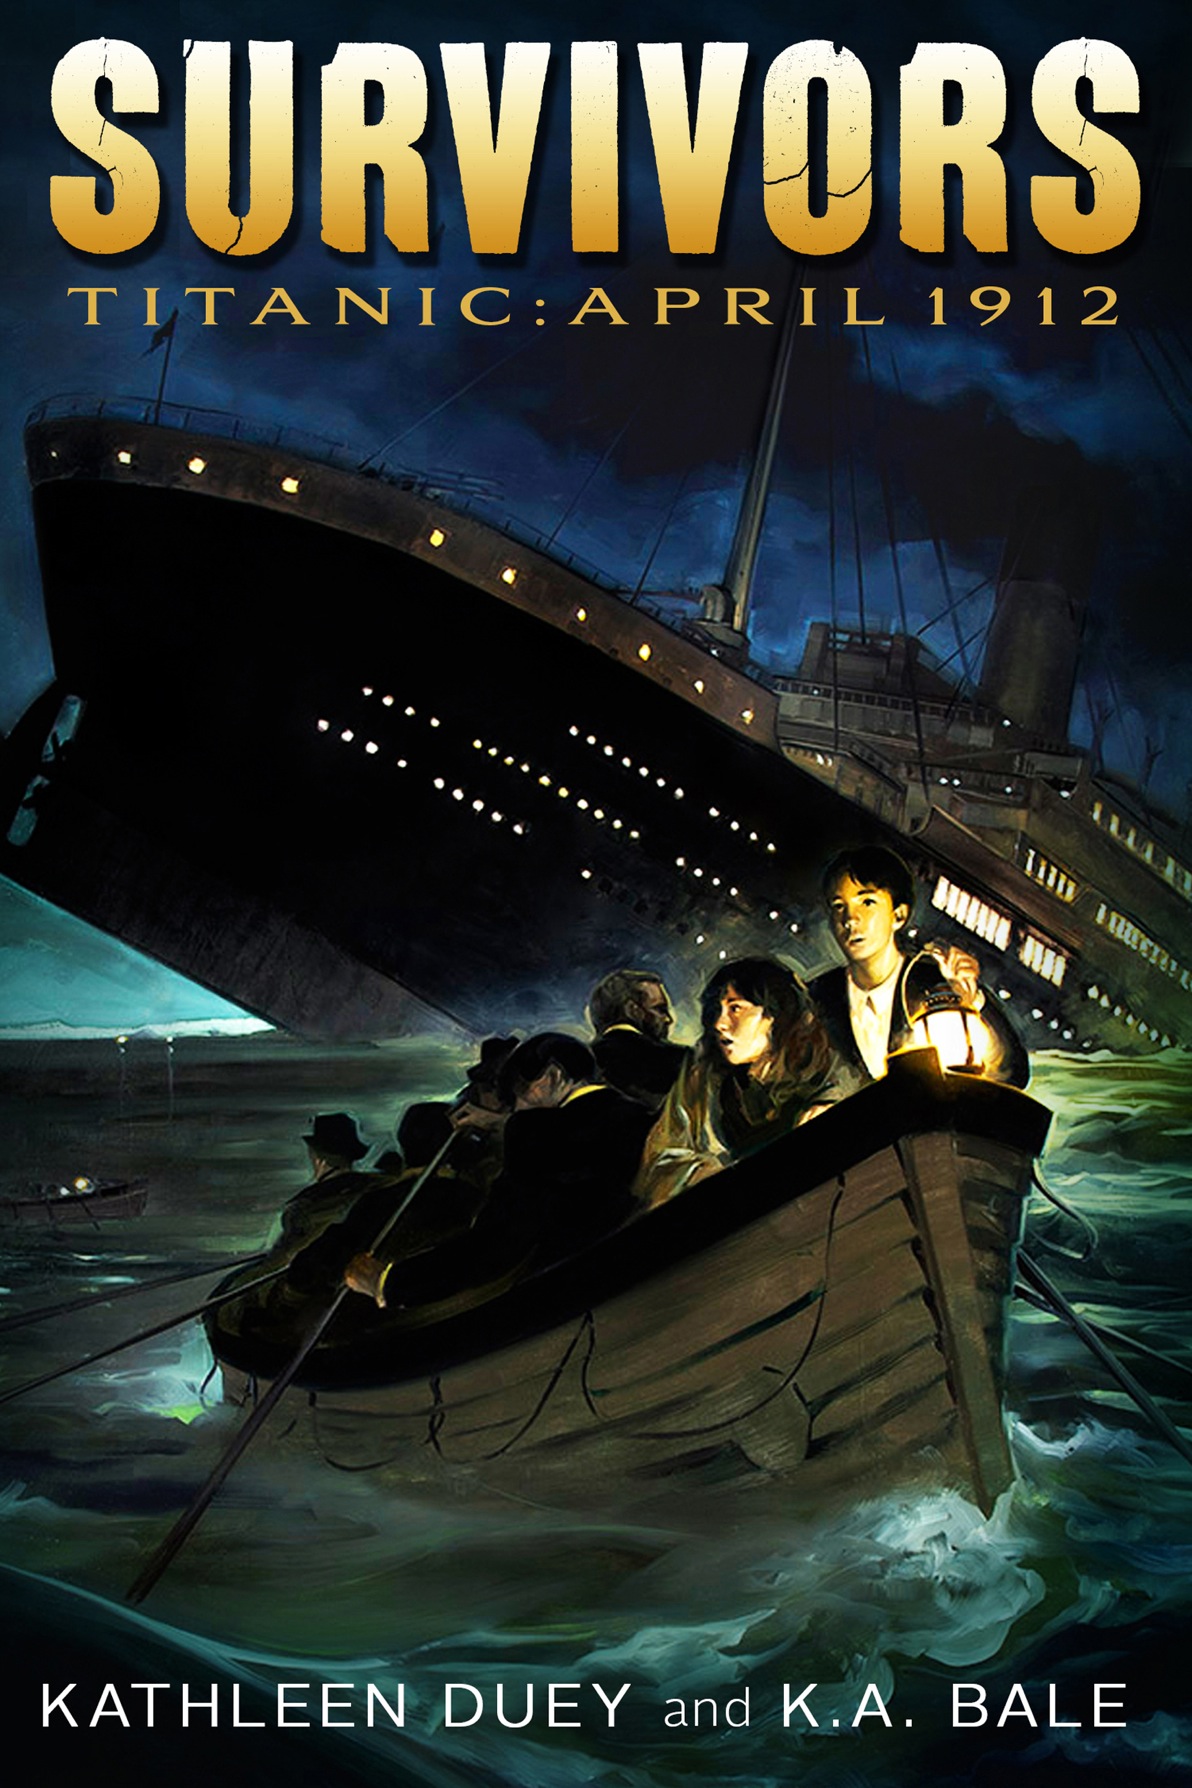 Titanic: April 1912 by Kathleen Duey